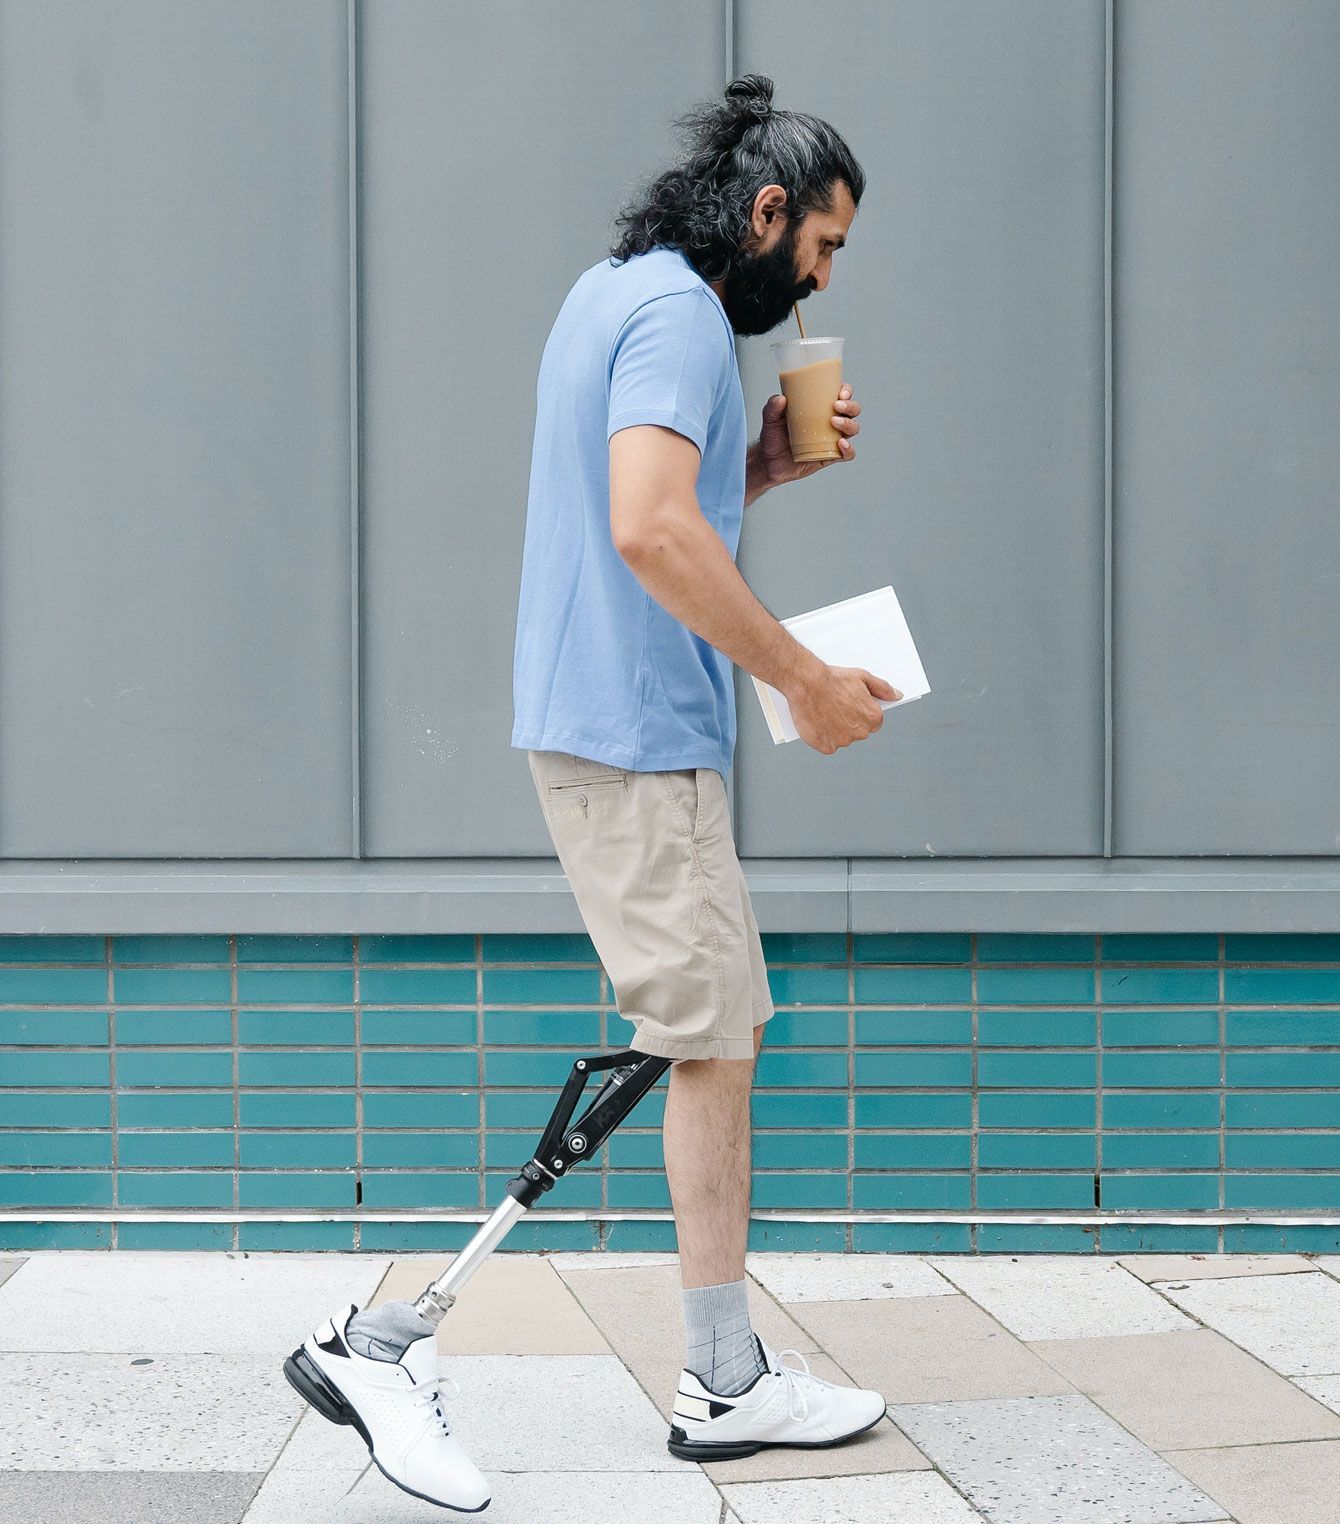 Man with Prosthetic Leg in public